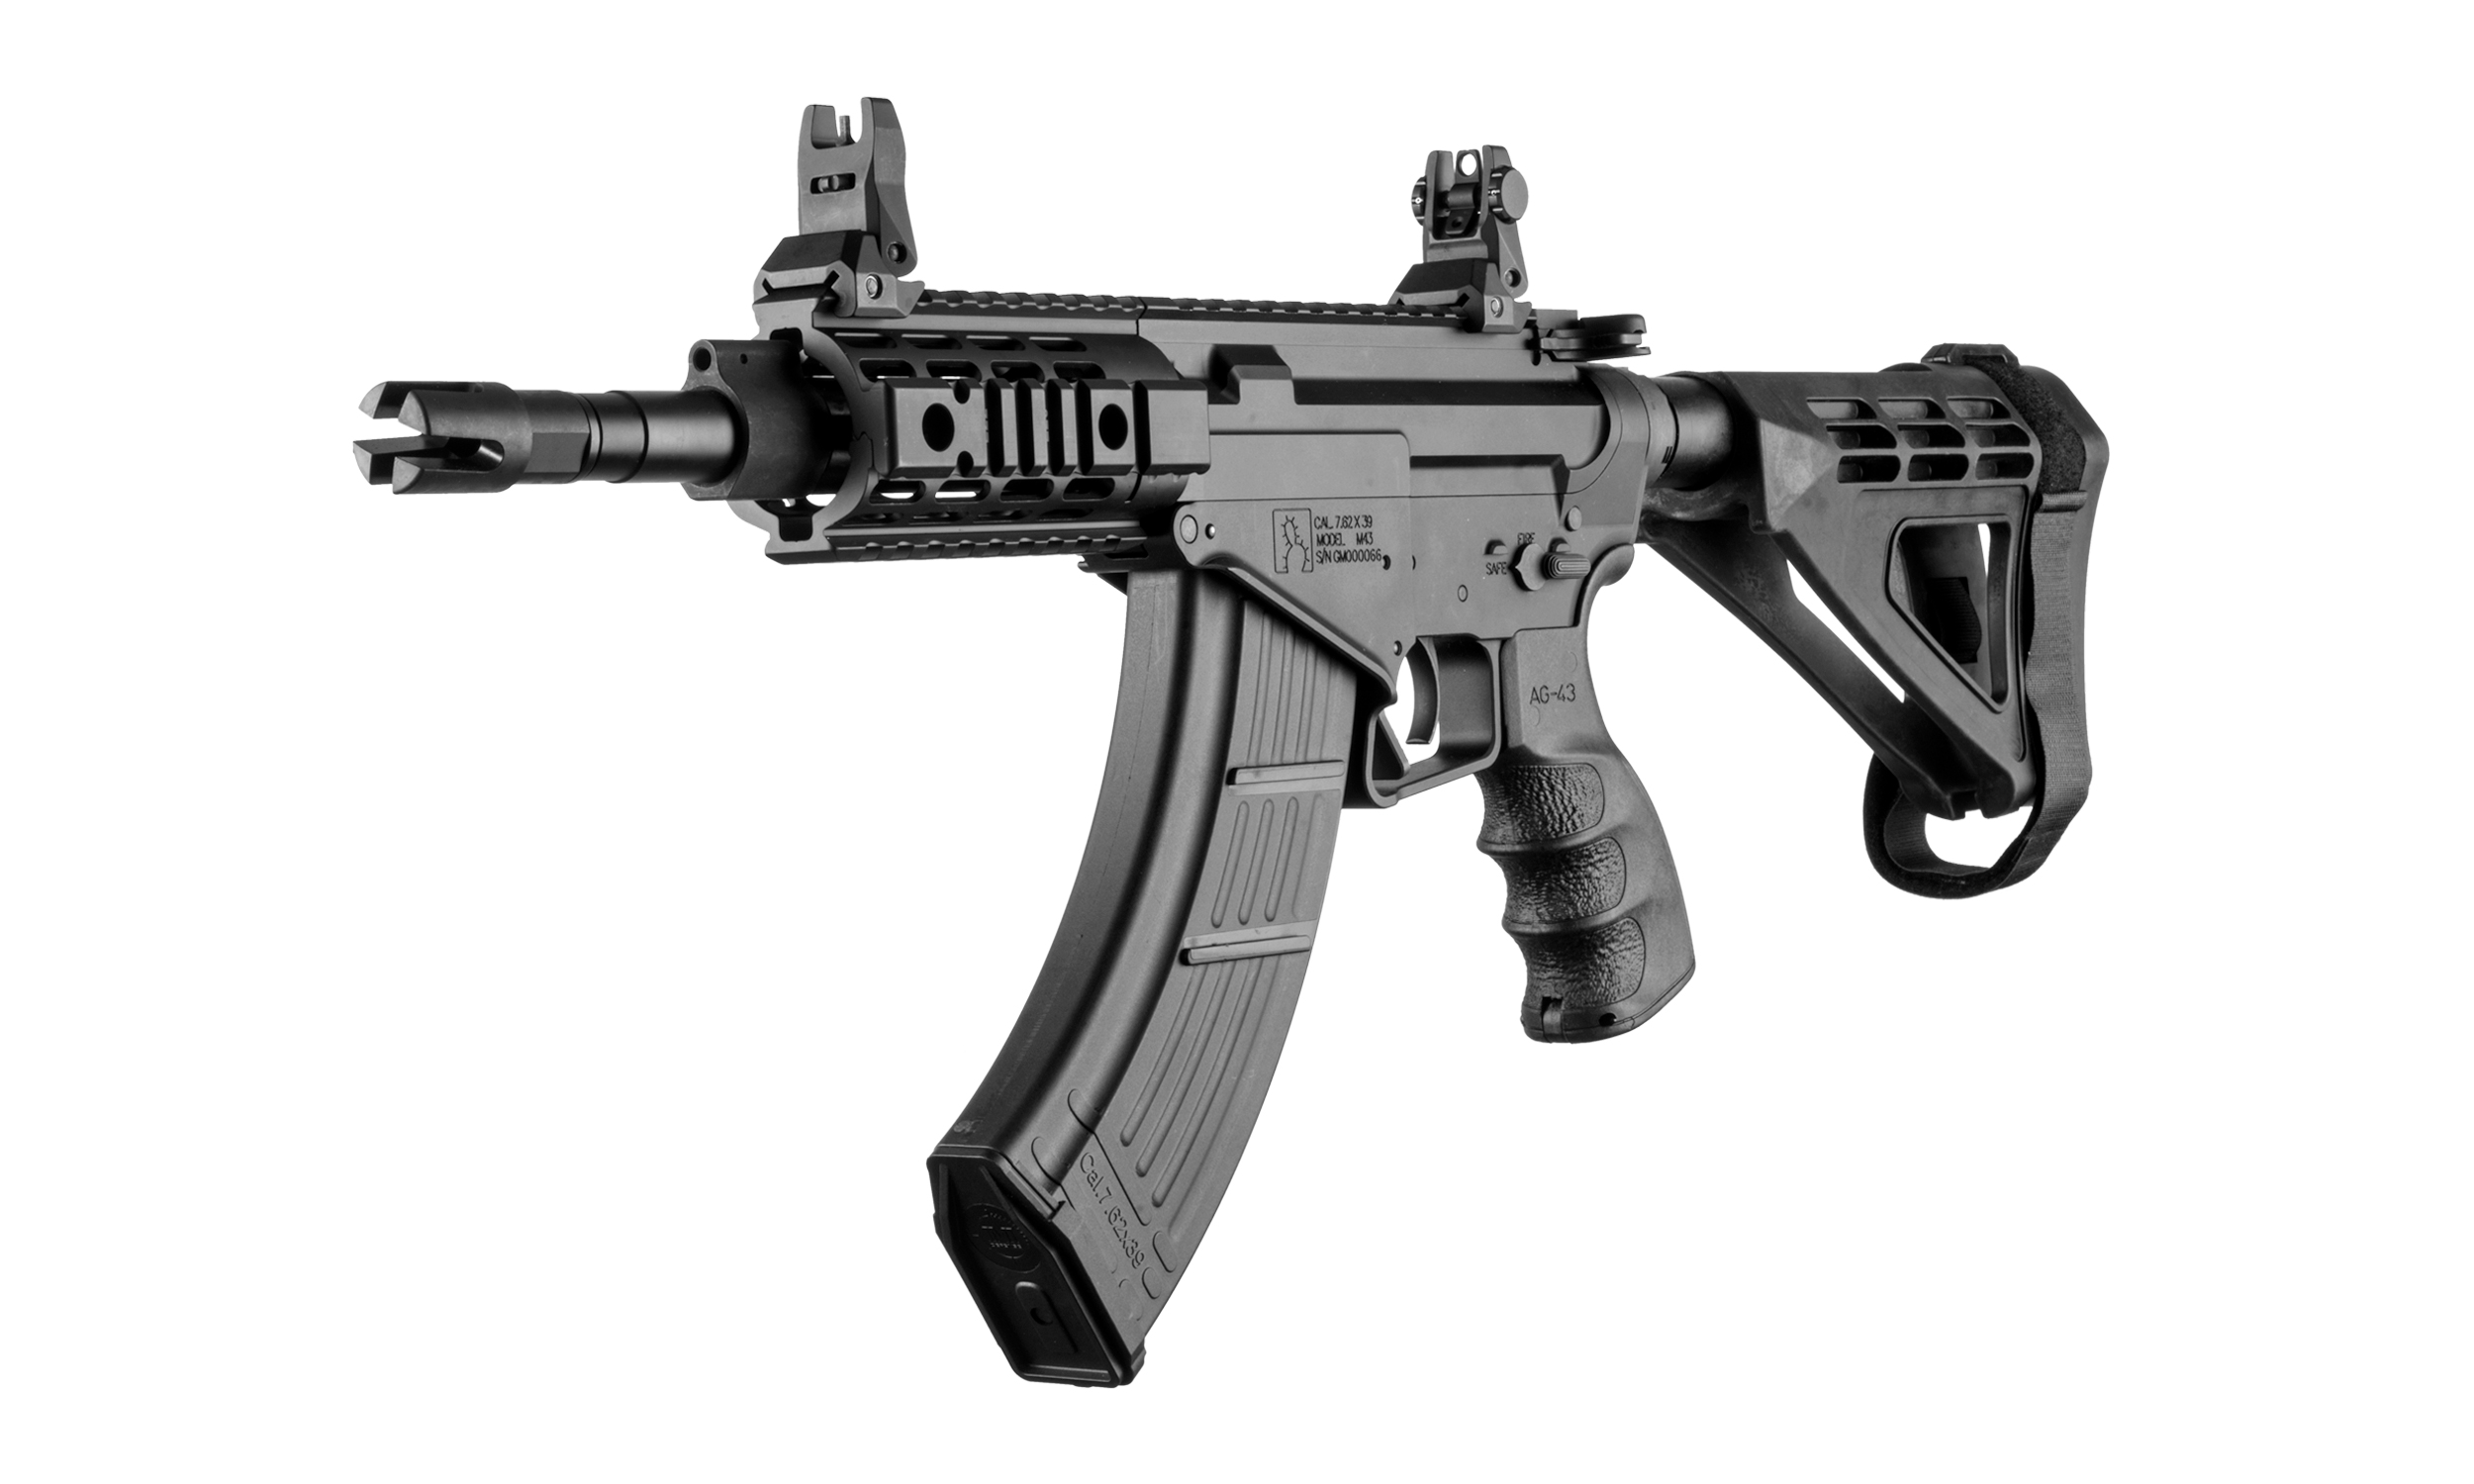 Gilboa-M-43-Pistol-with-Stabilizing-Brace-7.62X39mm.jpg